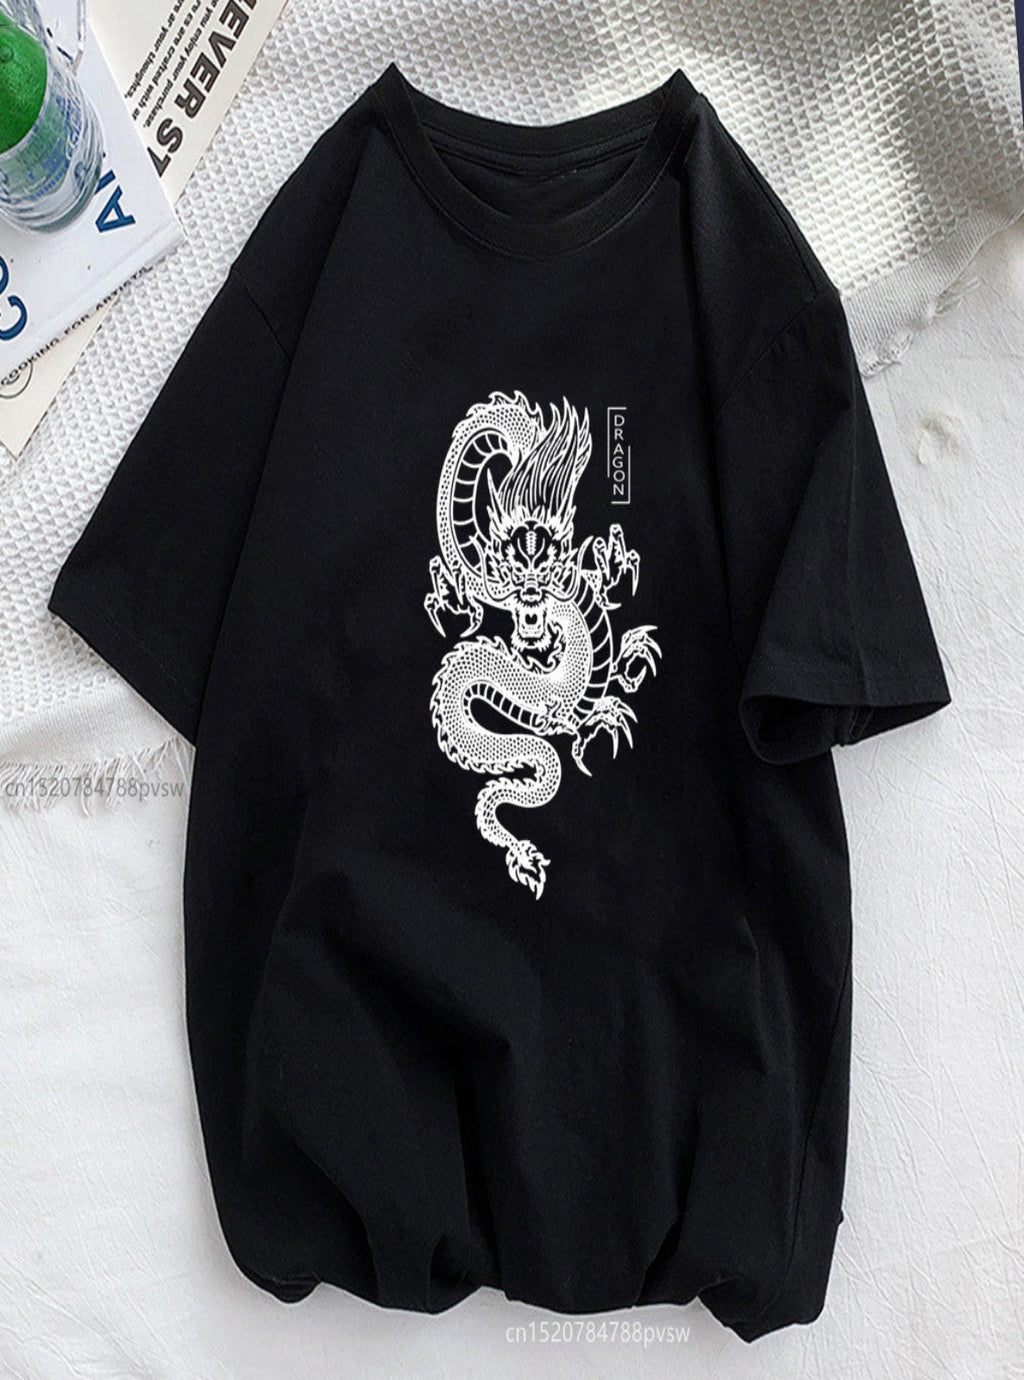 Dragon Print T-Shirt